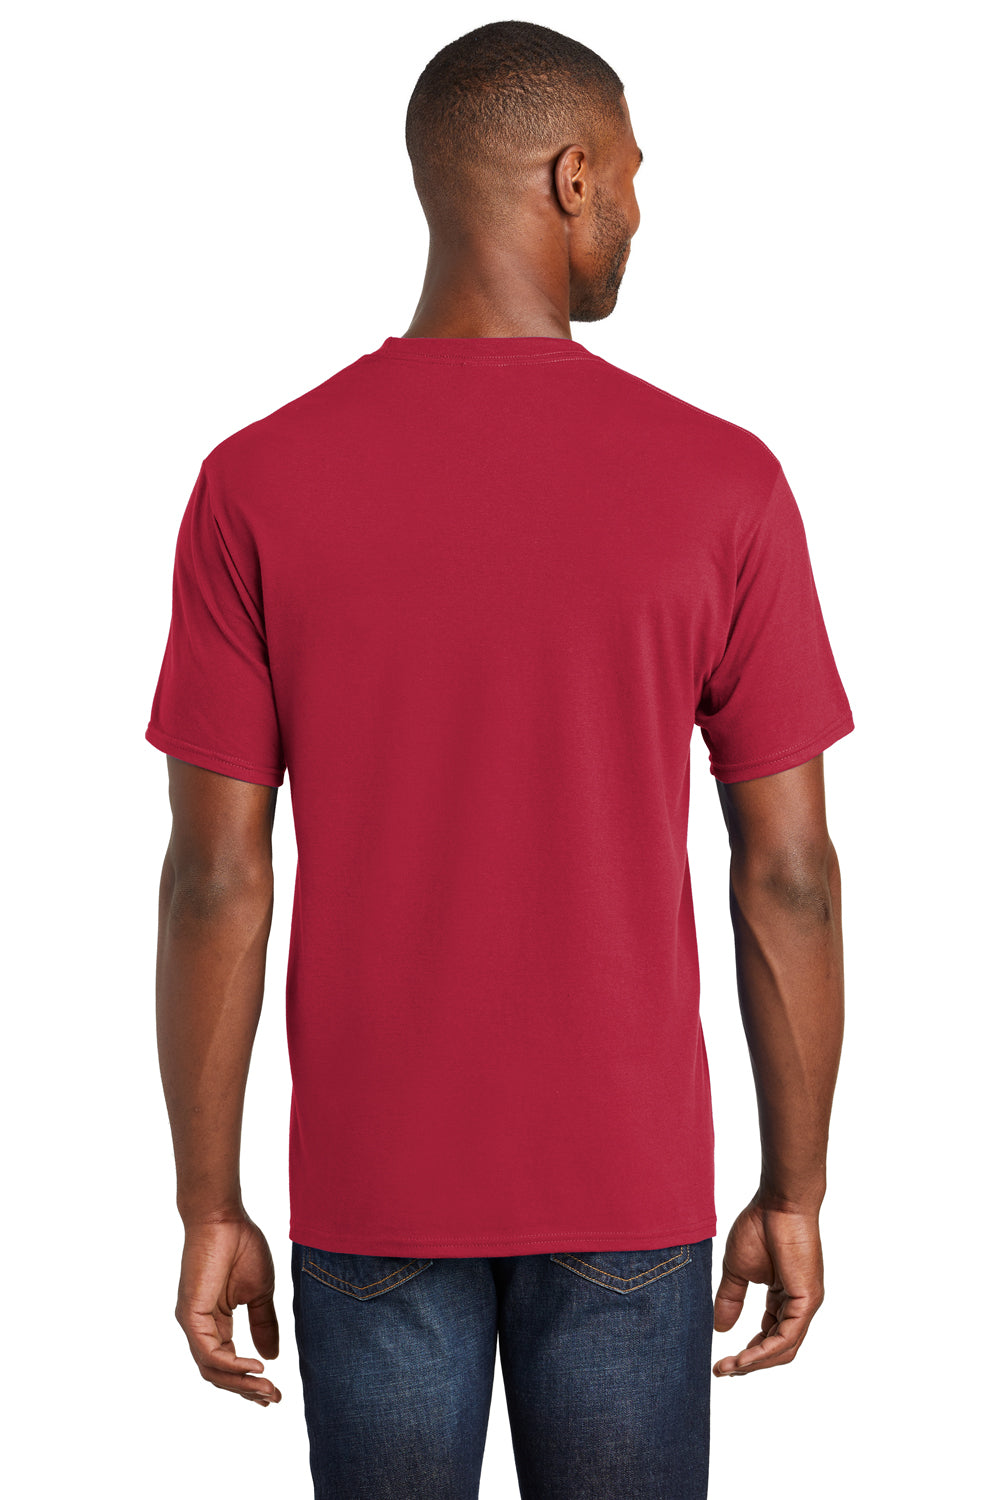 Port & Company PC450 Mens Fan Favorite Short Sleeve Crewneck T-Shirt Cardinal Red Back